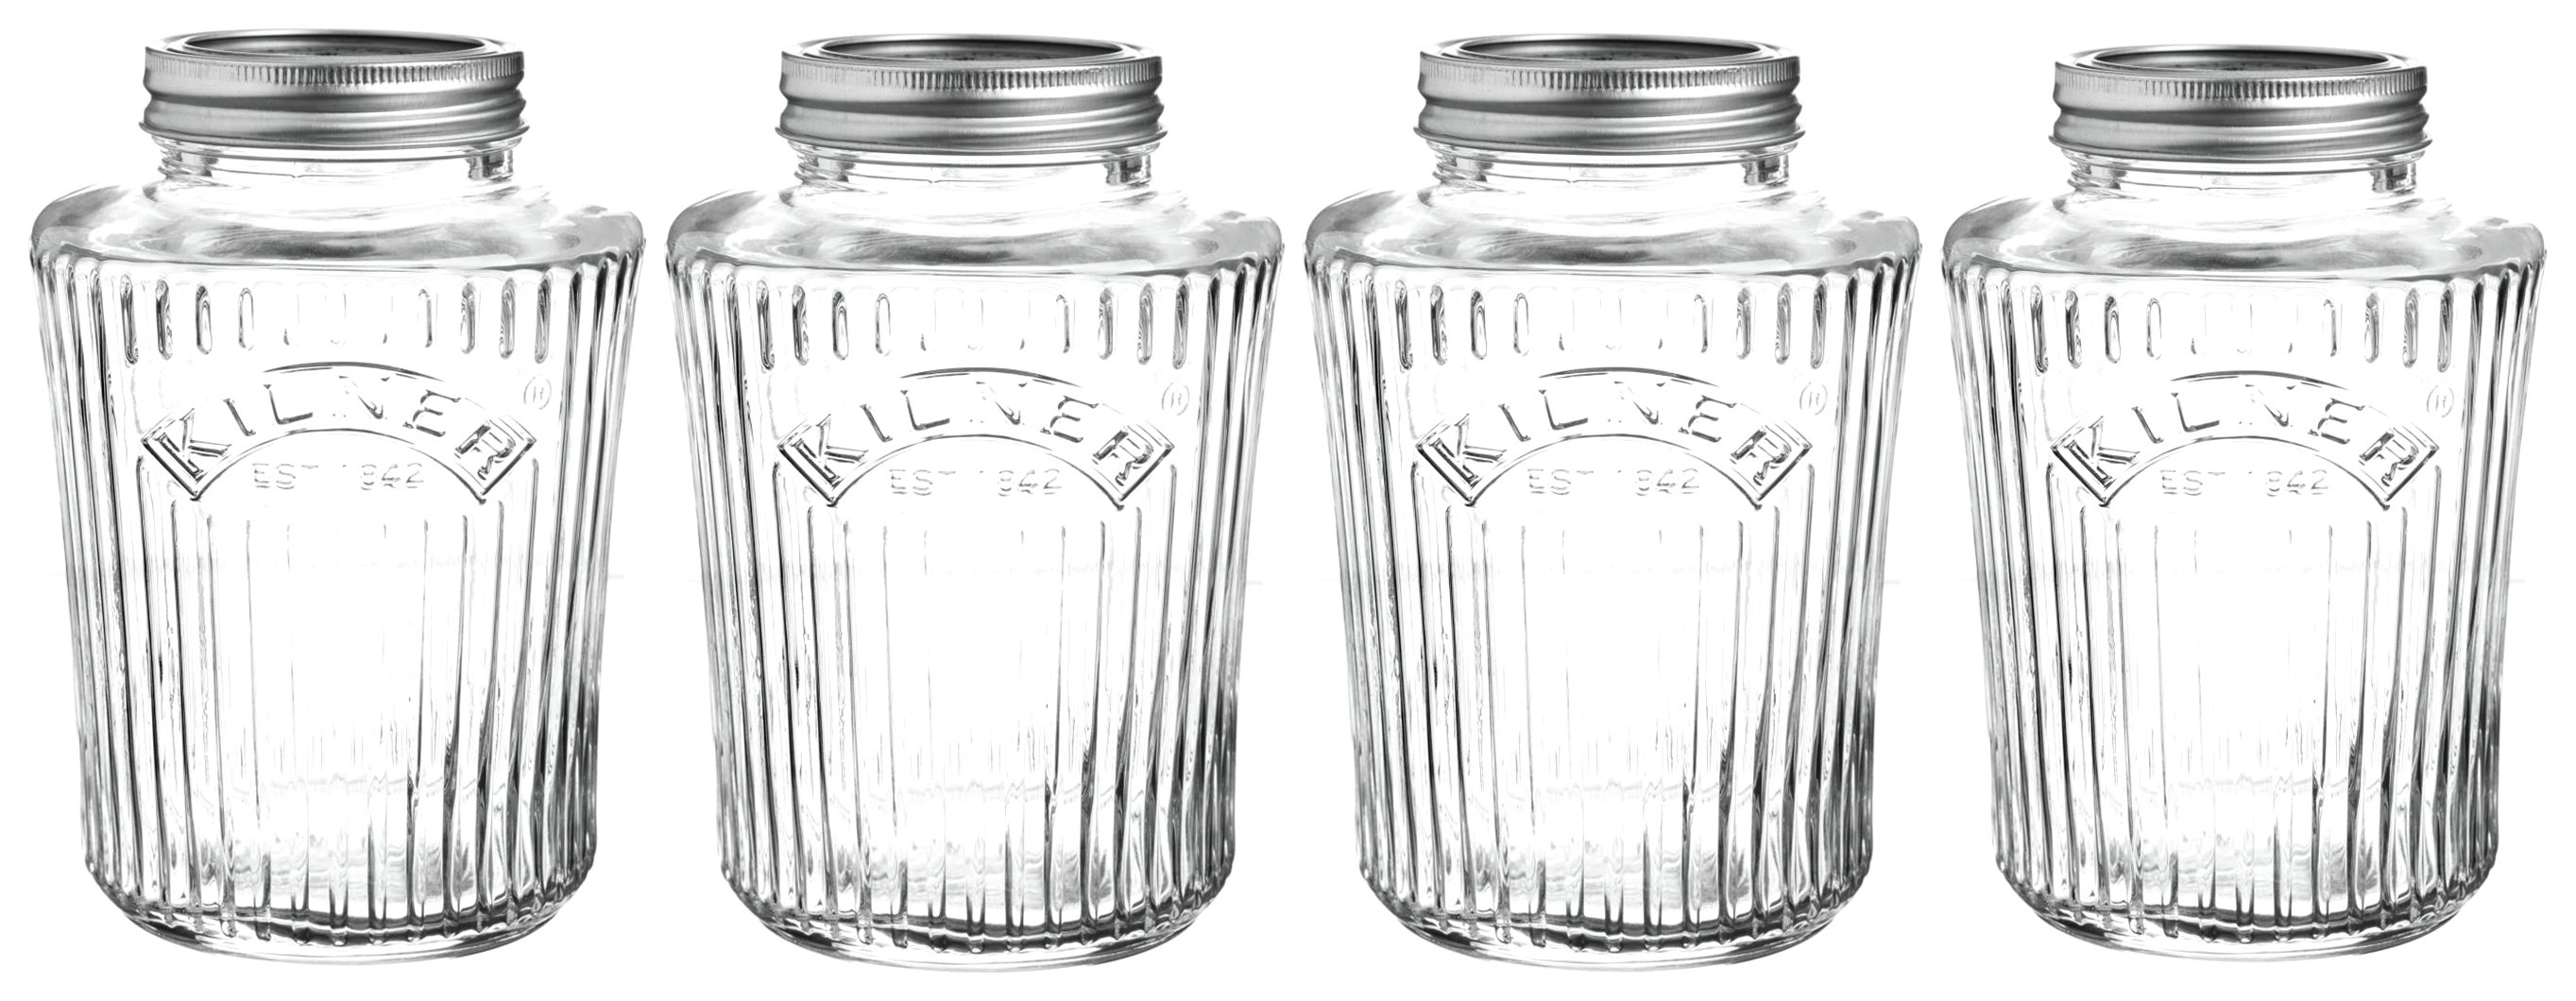 Kilner 1 Litre Preserve Jars - Set of 4